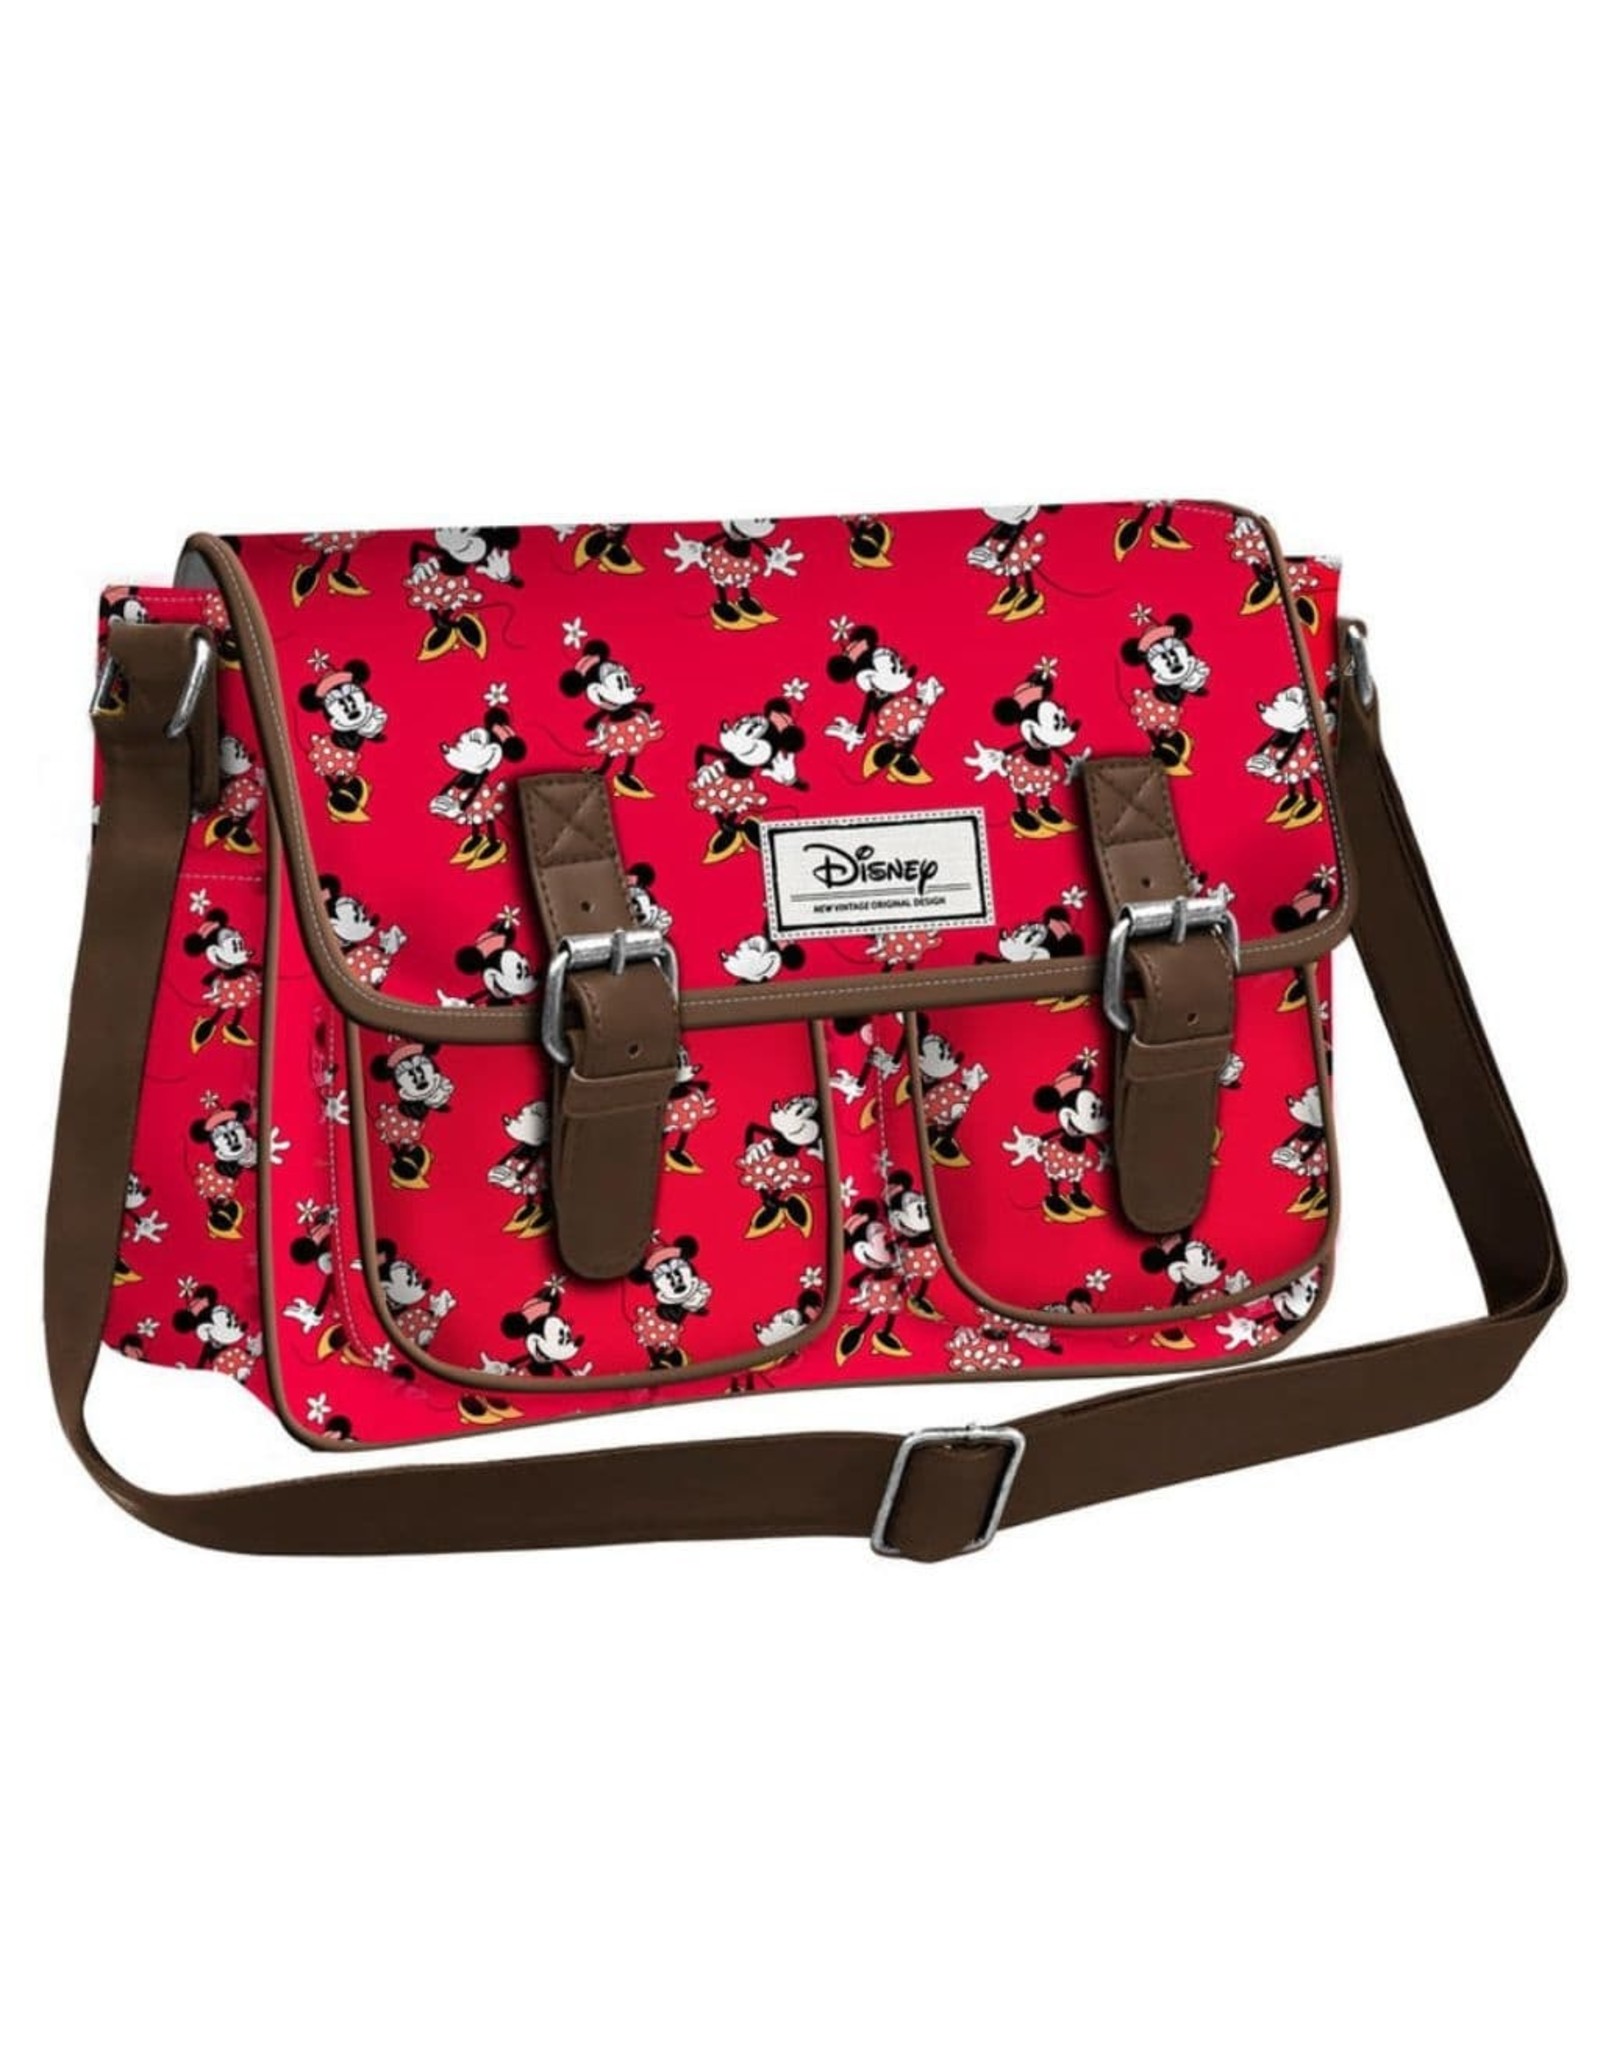 Disney Disney bags - Disney satchel bag Minnie Mouse Cheerful